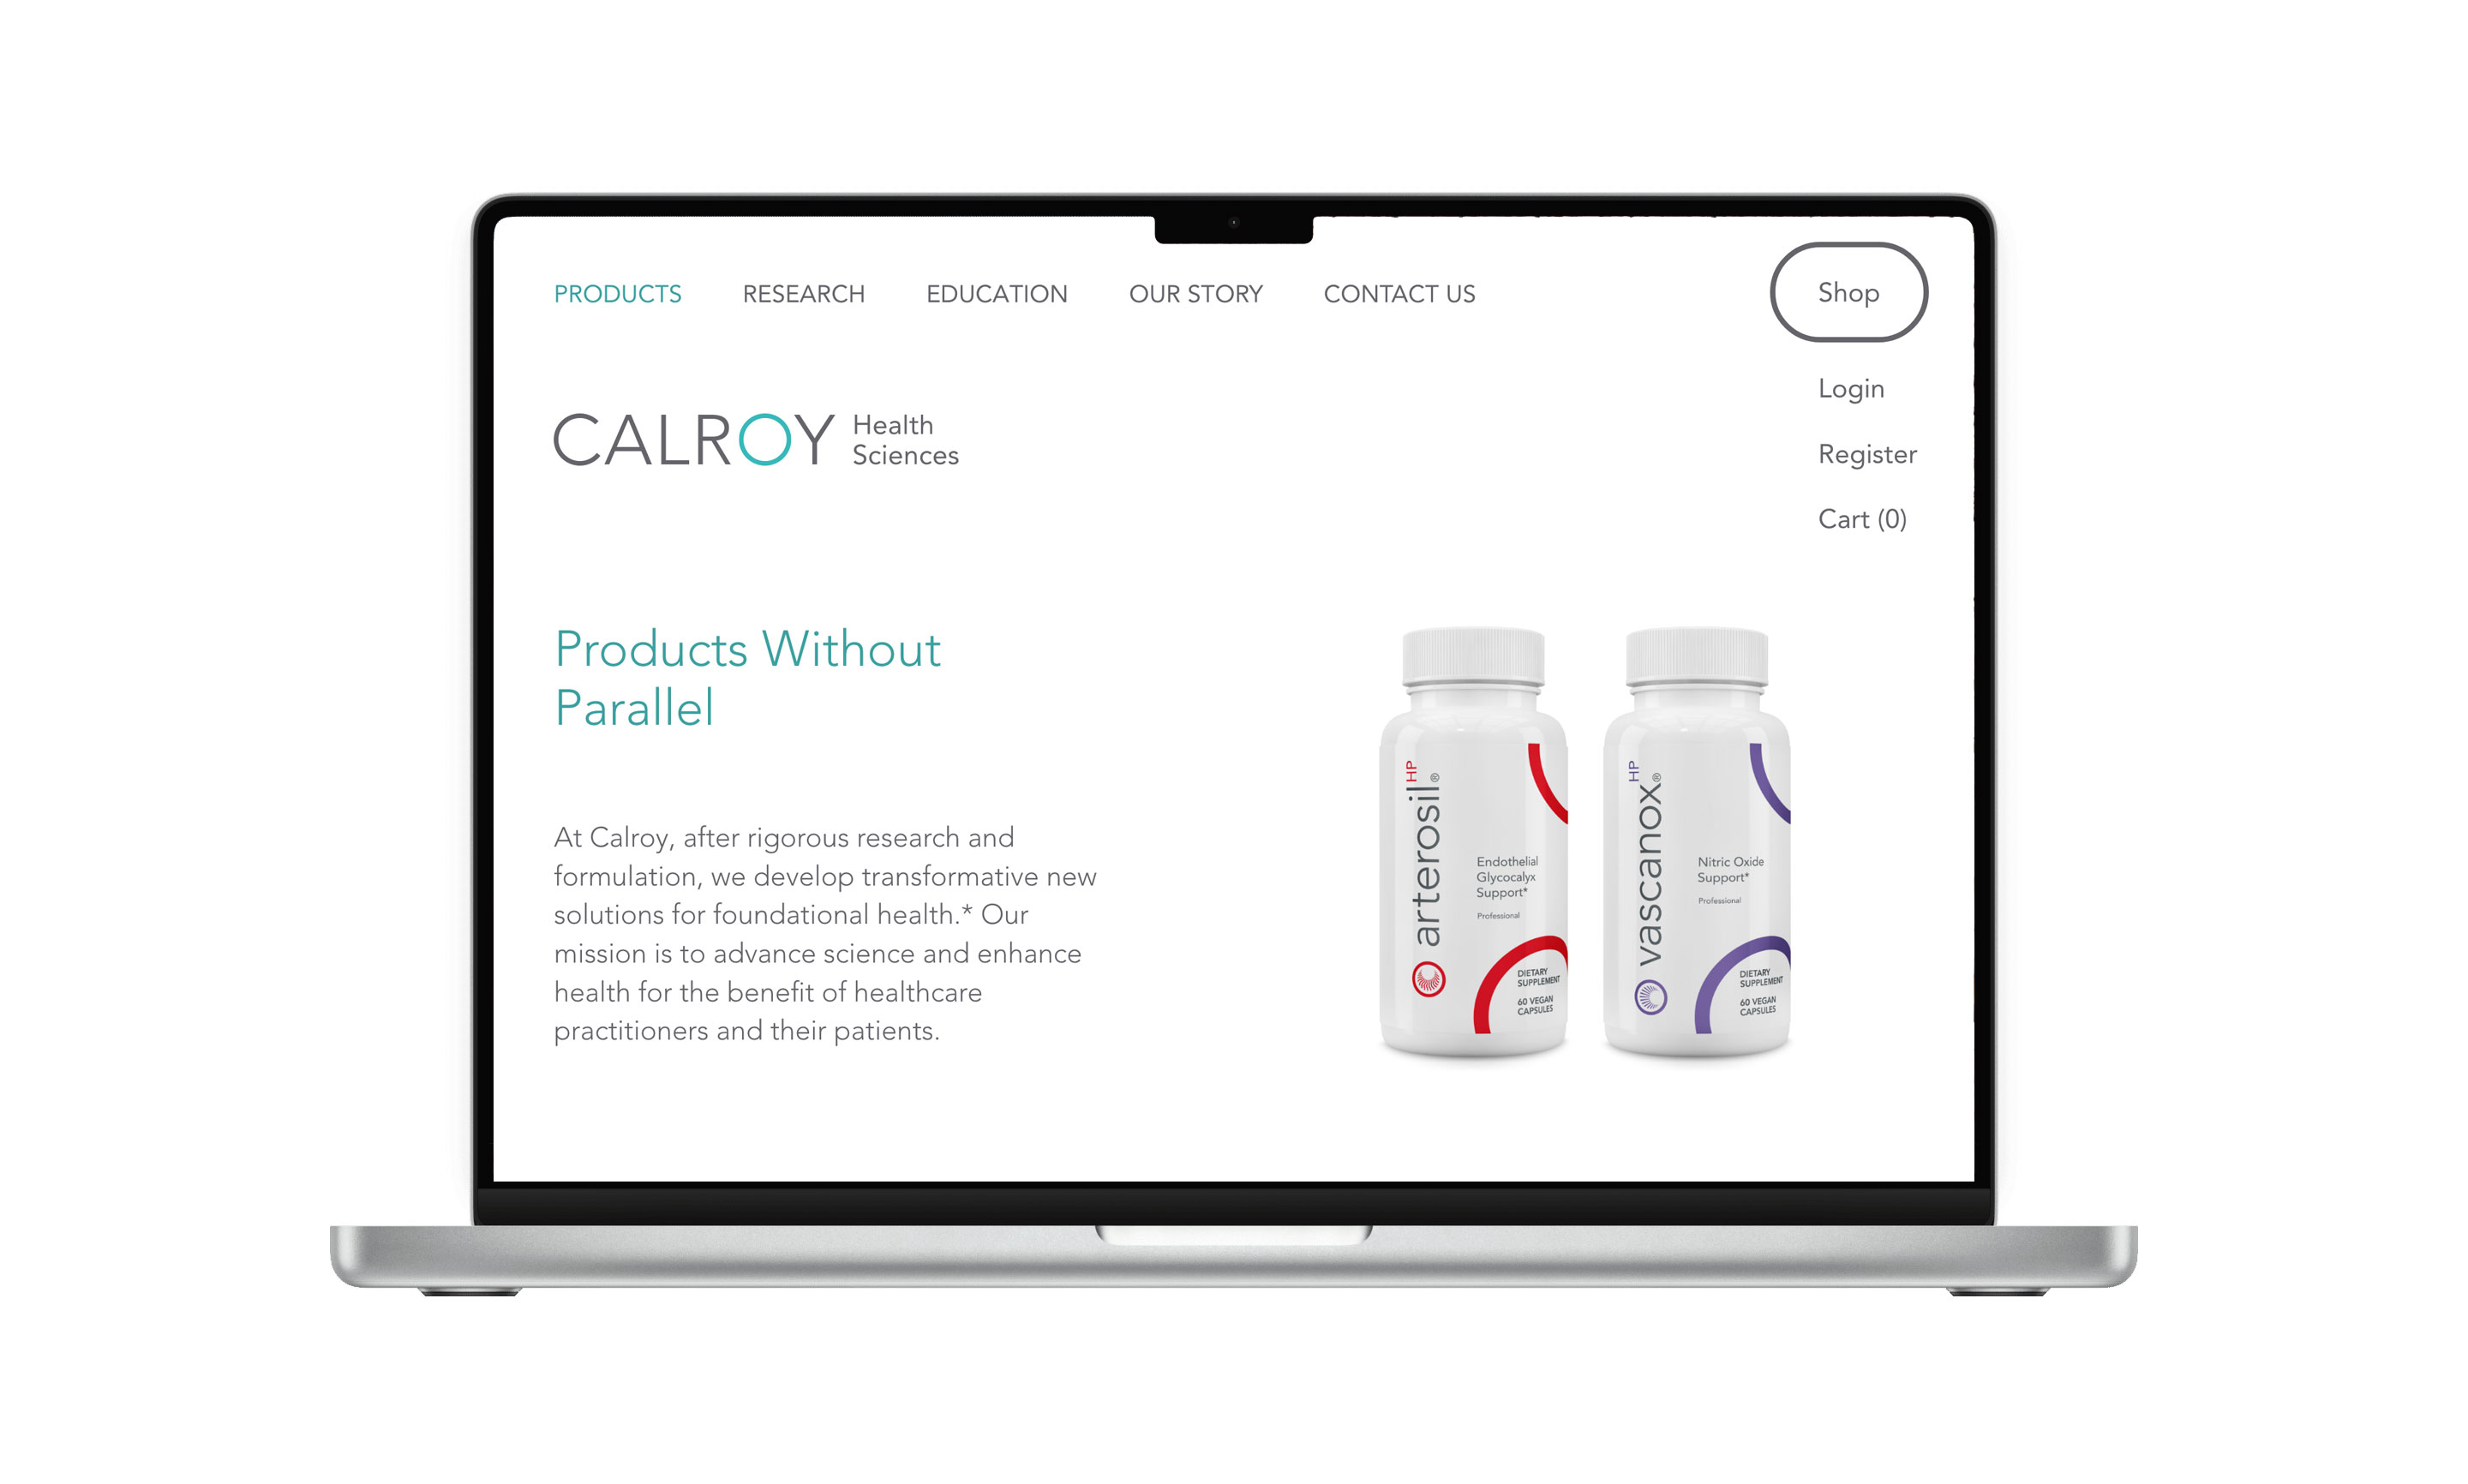 Calroy Health Sciences website viewed in monitor